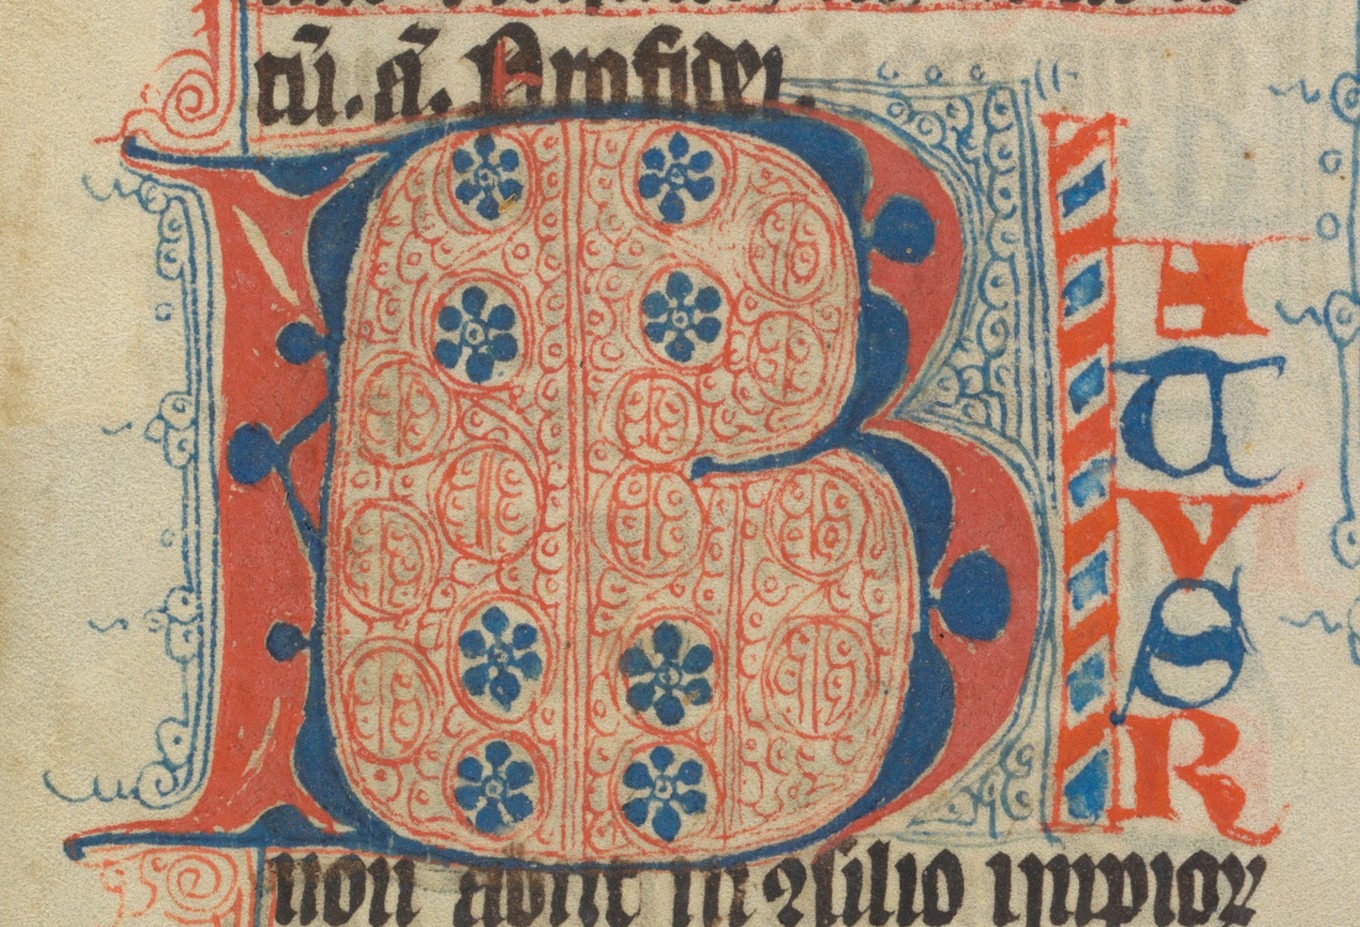 St. Gallen, Cod. Sang. 405, p. 1, Beginning of Psalter